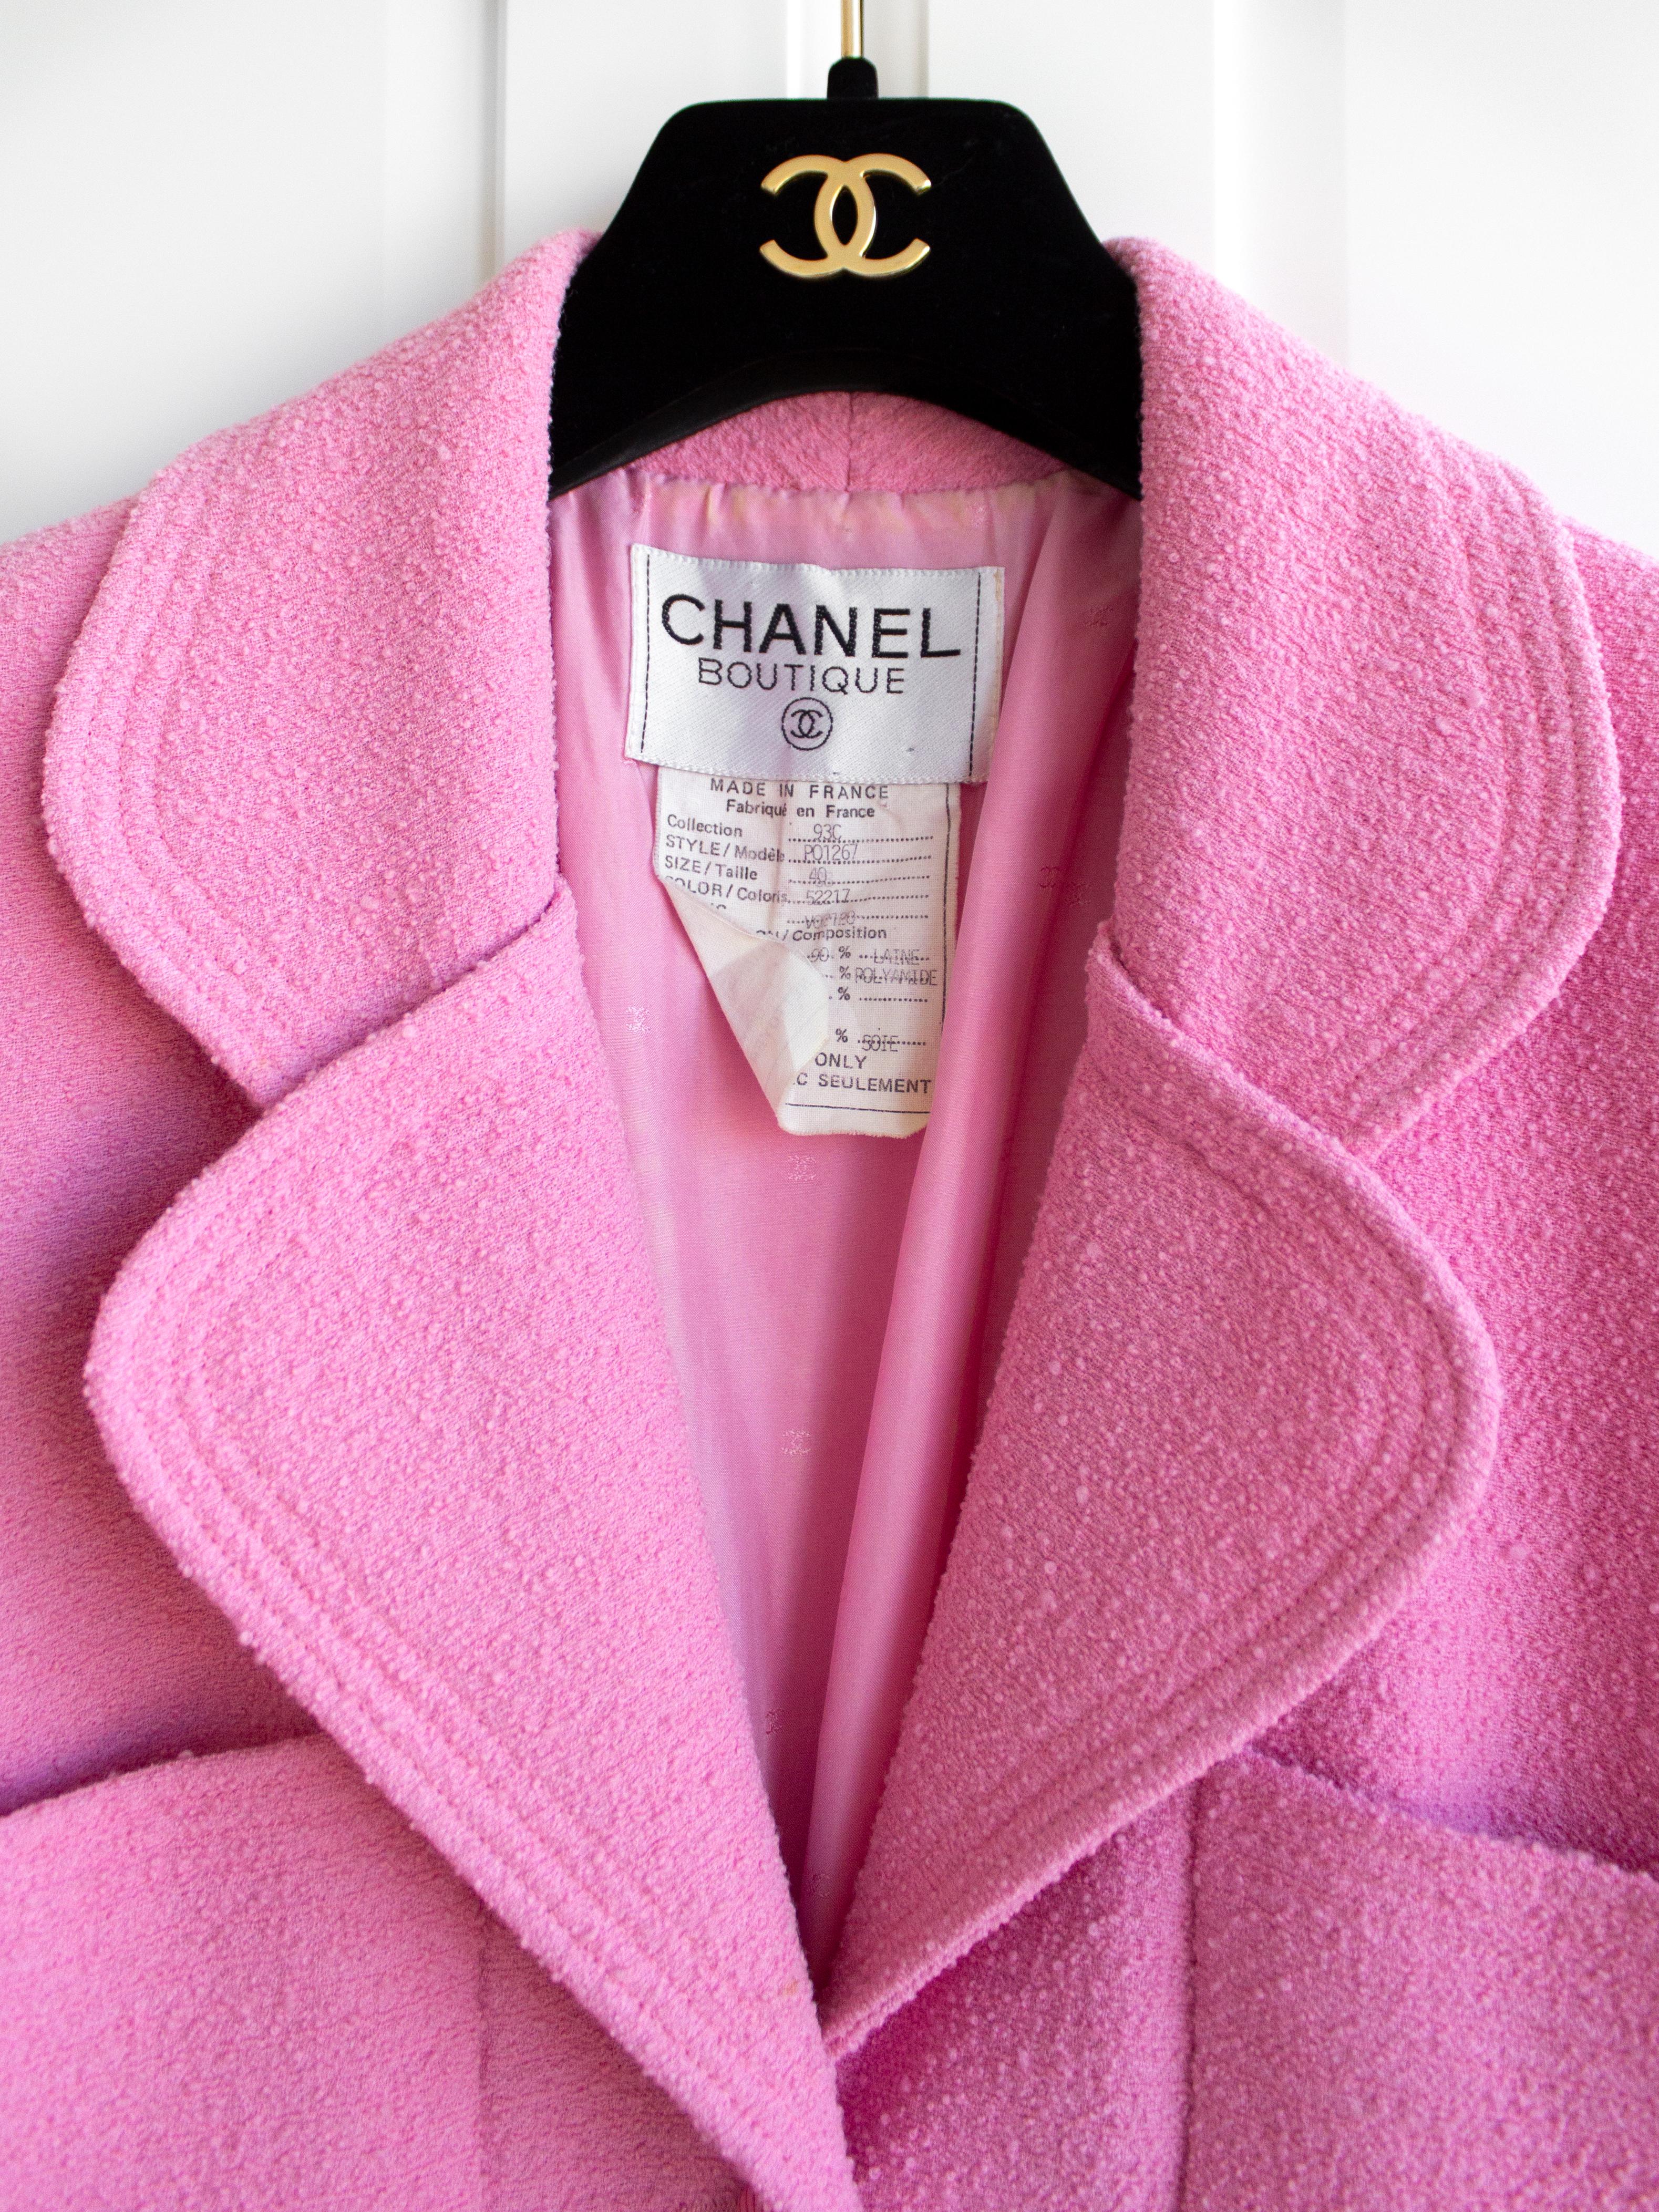 Rare Chanel Vintage Cruise 1993 Bubblegum Pink Gold 93C Tweed Jacket Skirt Suit 1